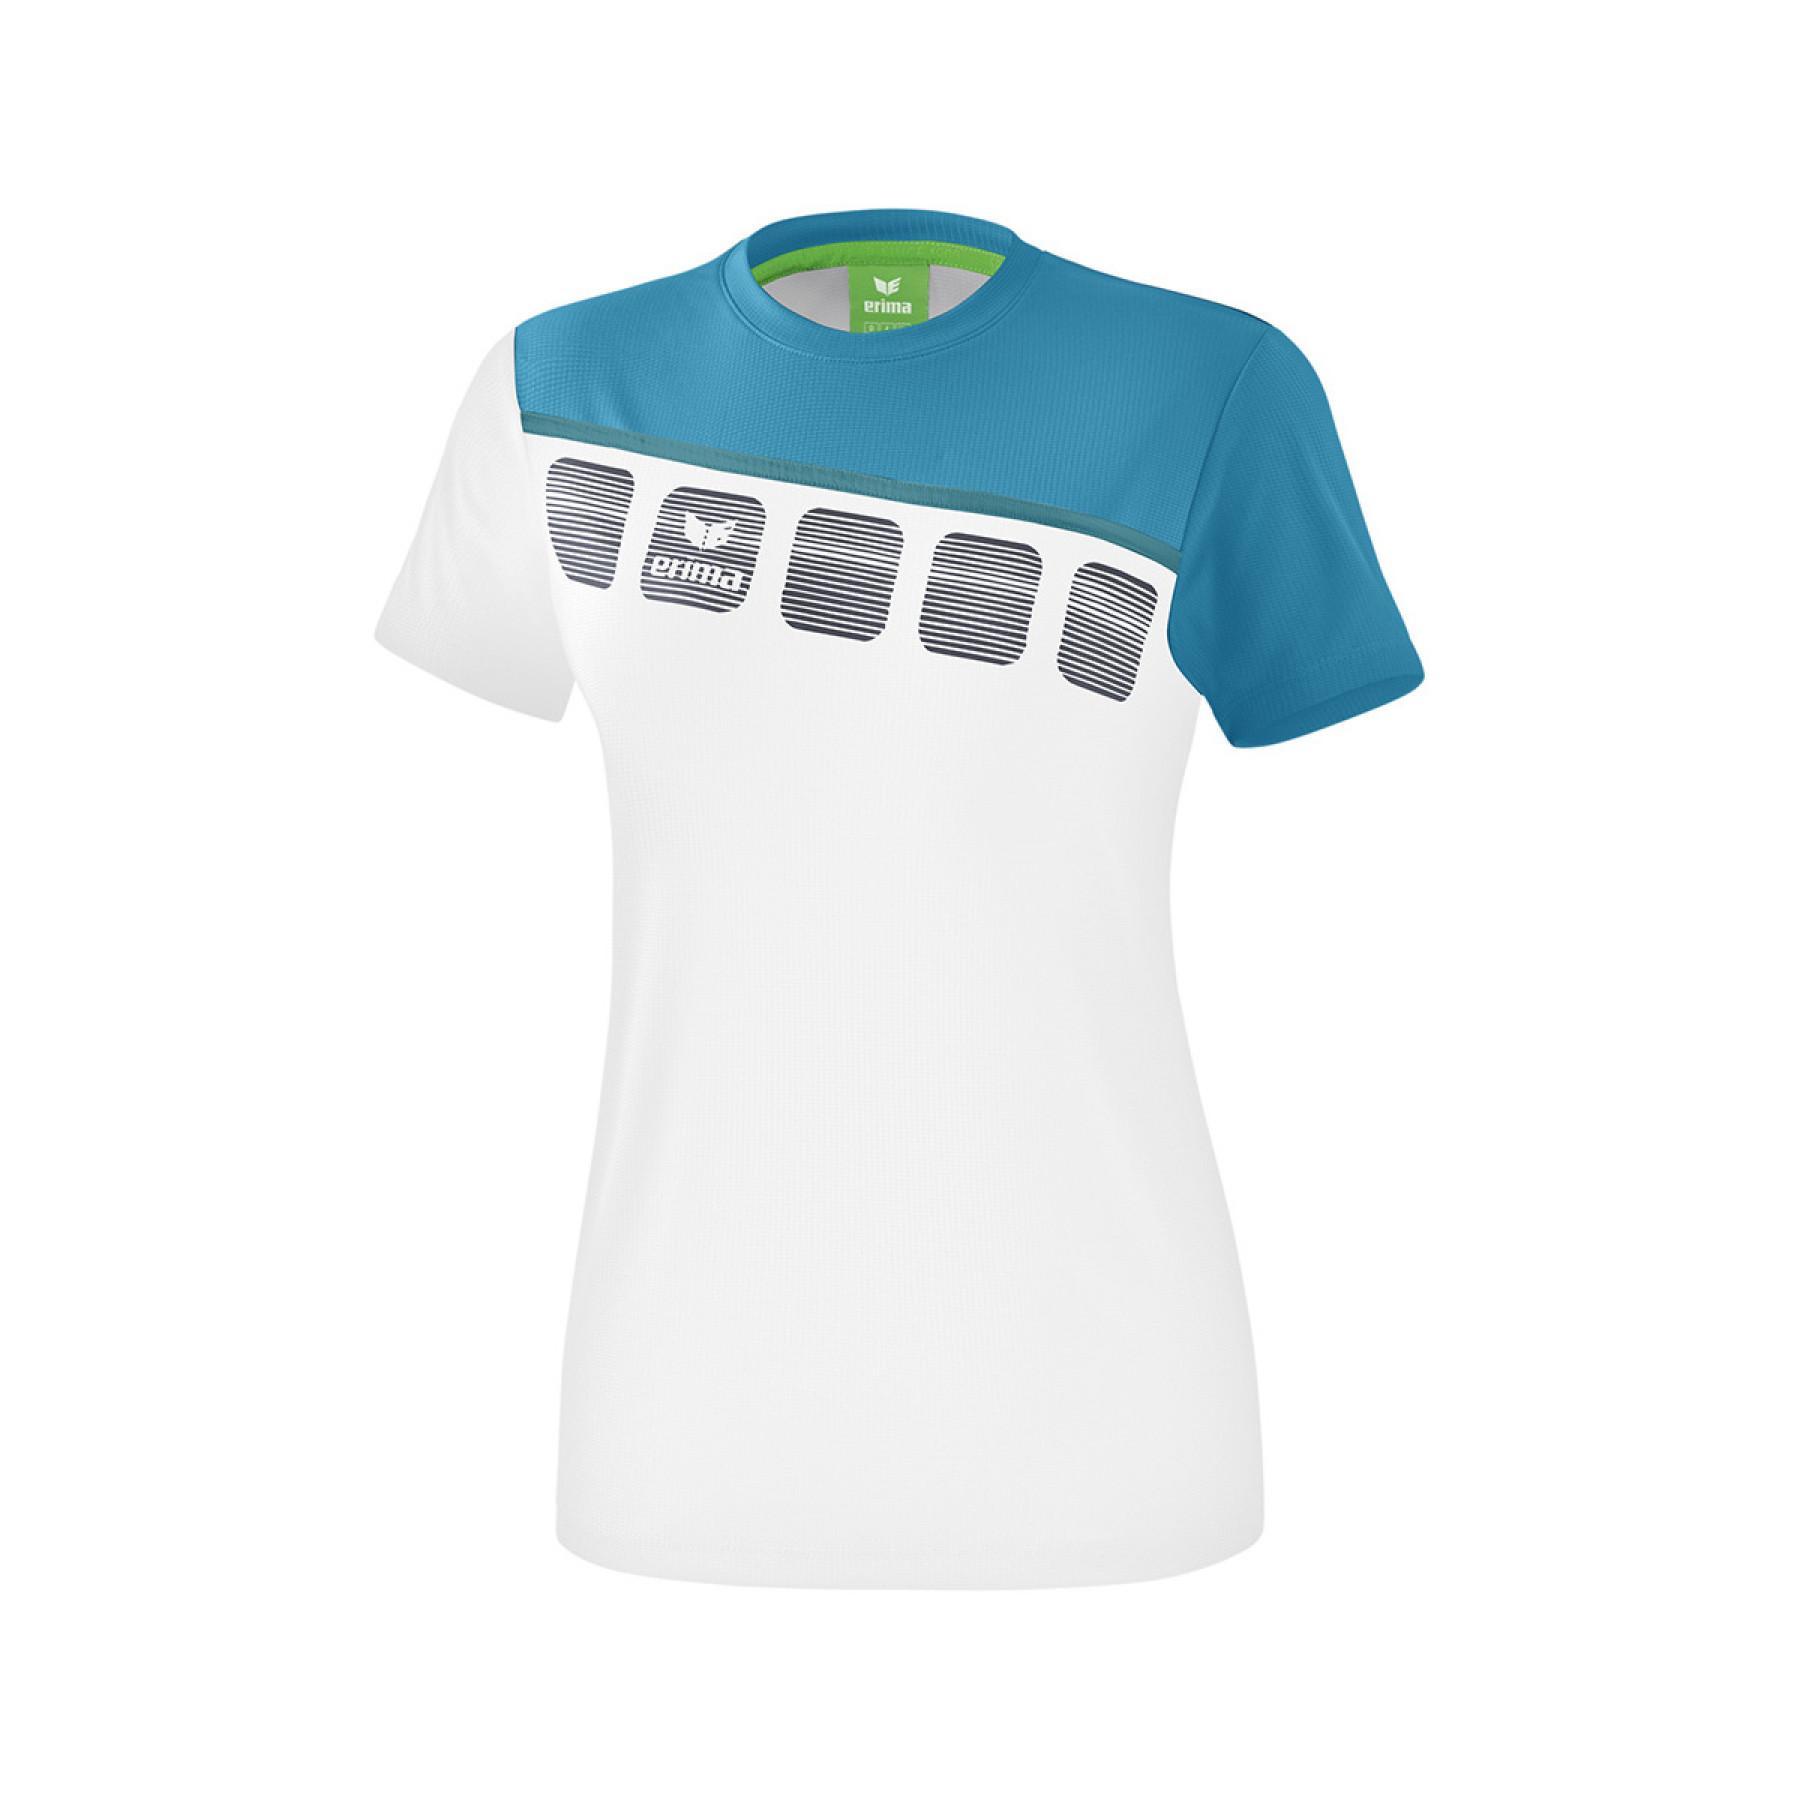 Inheems Succesvol lid Women's T-shirt Erima 5-C - Erima - Brands - Volleyball wear